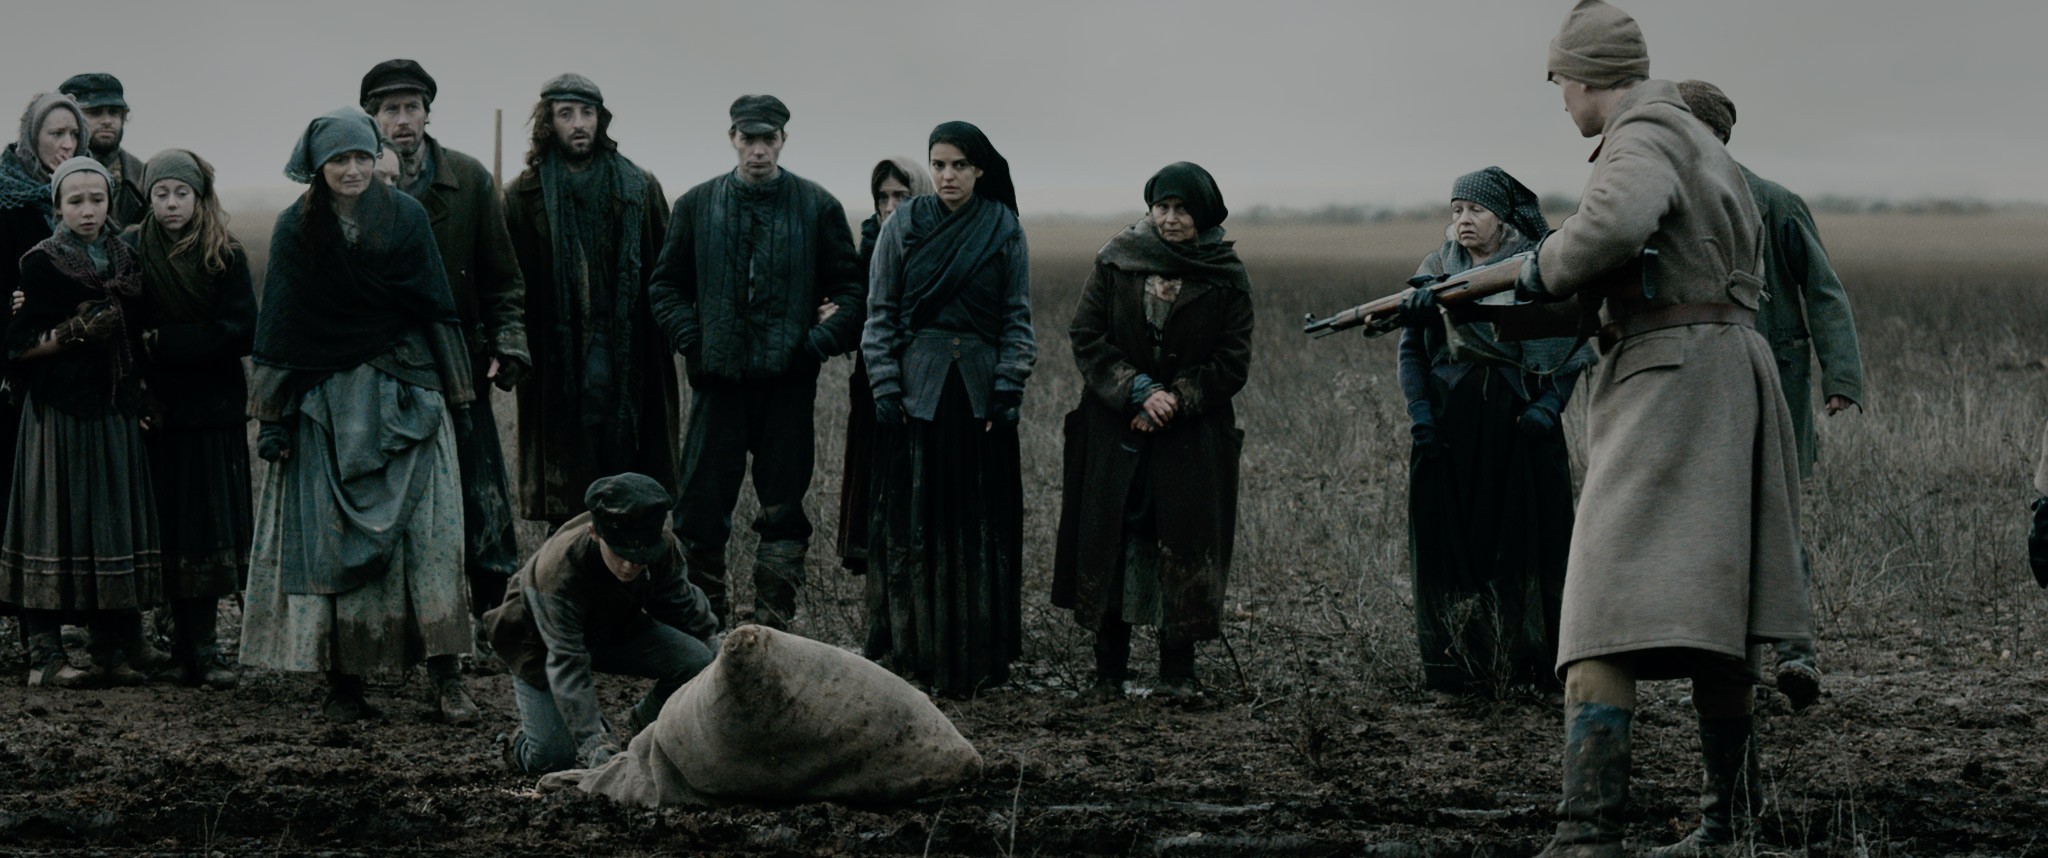 New Canadian movie sheds light on horror of Holodomor famine